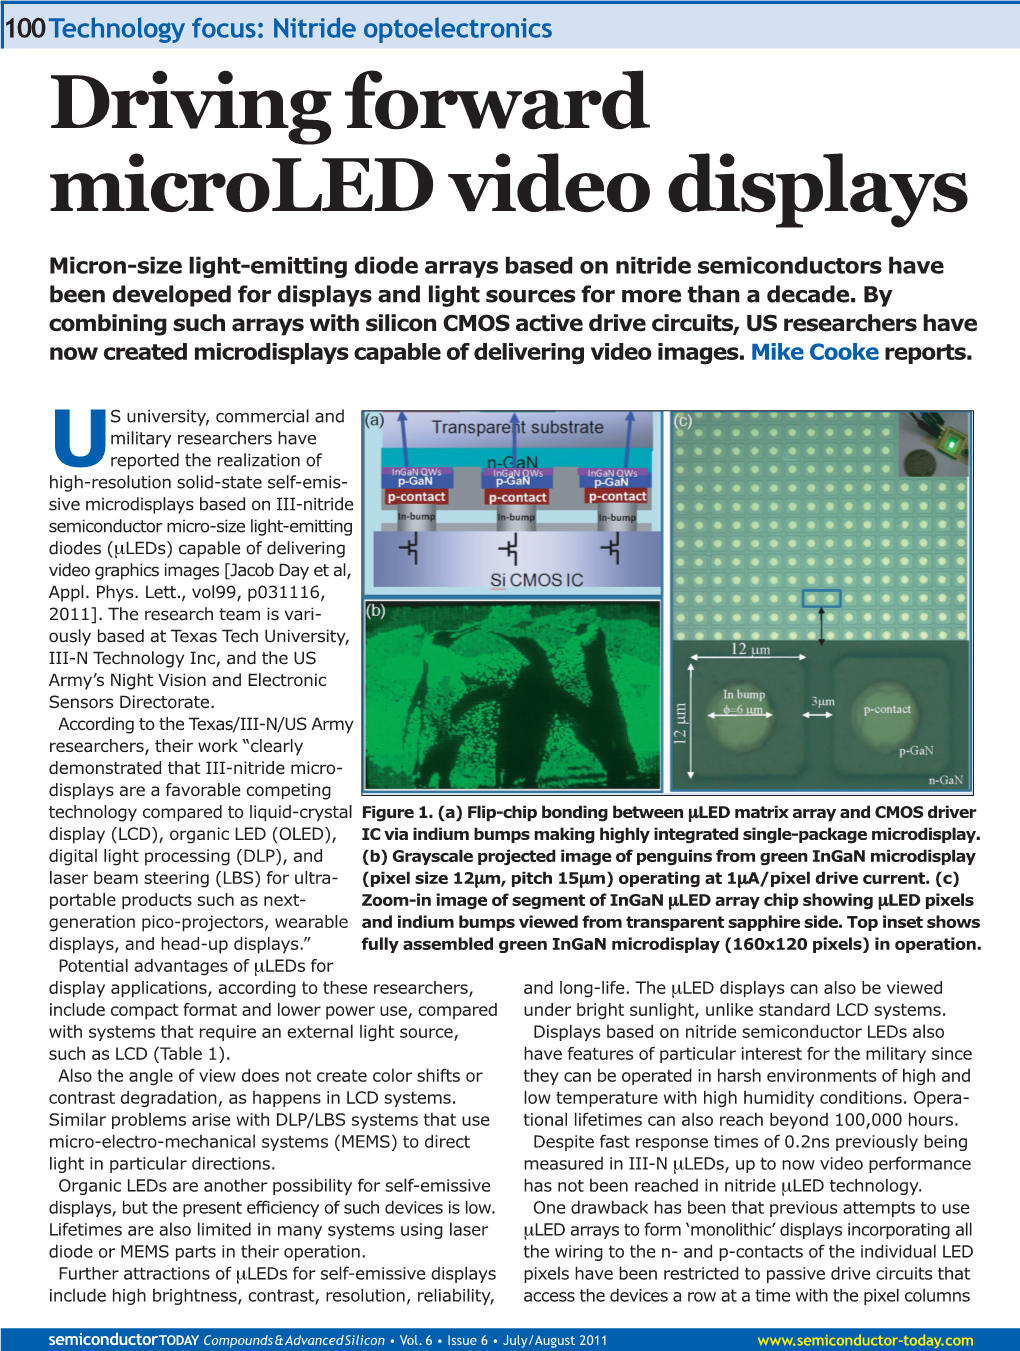 Driving Forward Microled Video Displays